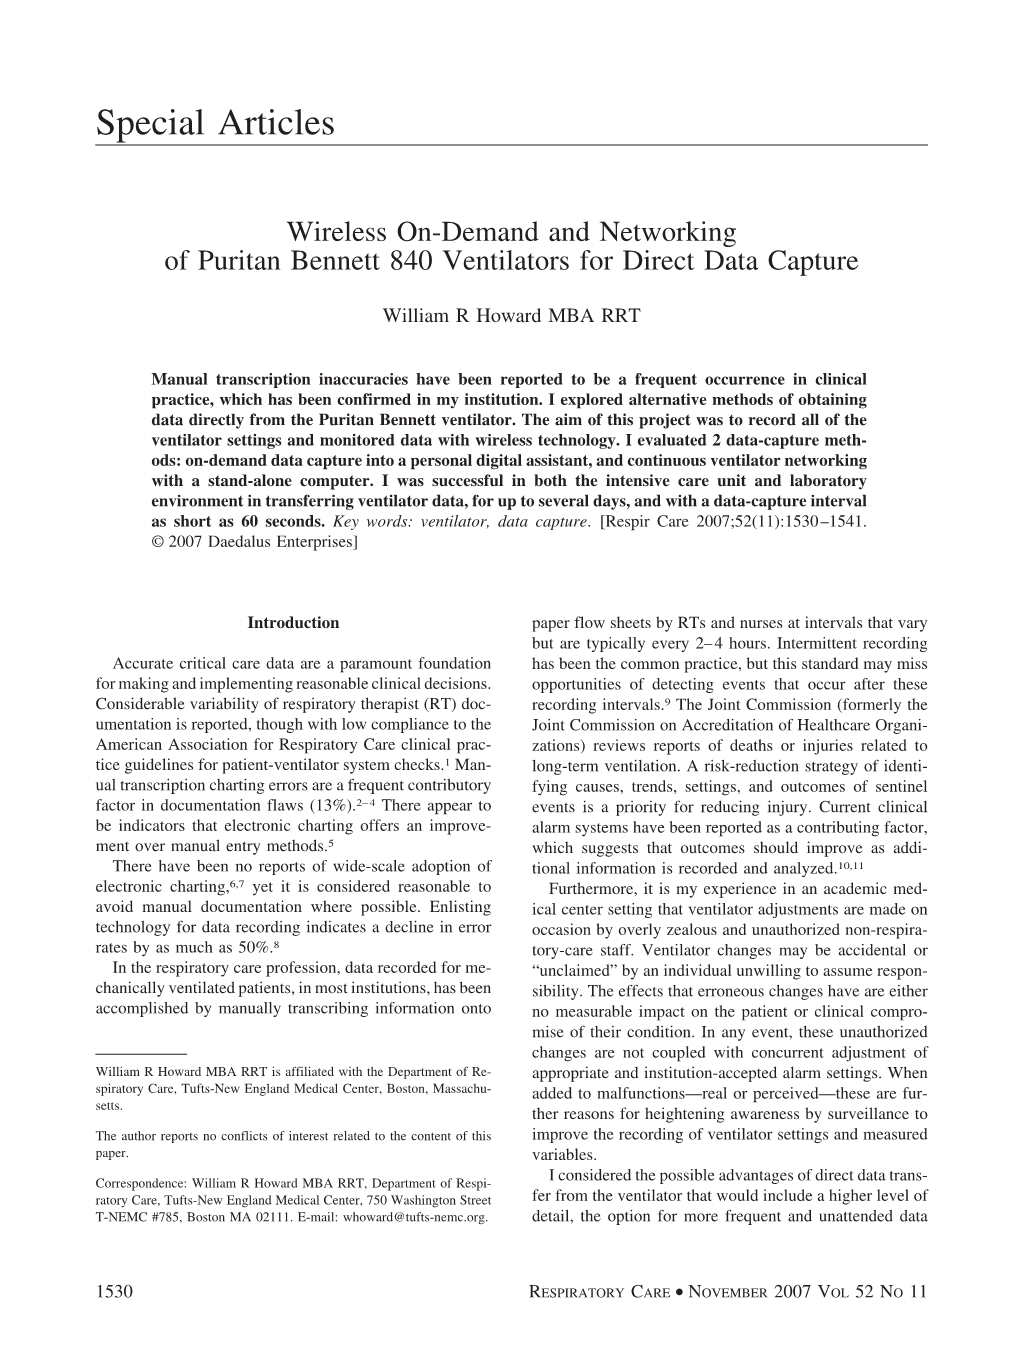 Wireless On-Demand and Networking of Puritan Bennett 840 Ventilators for Direct Data Capture